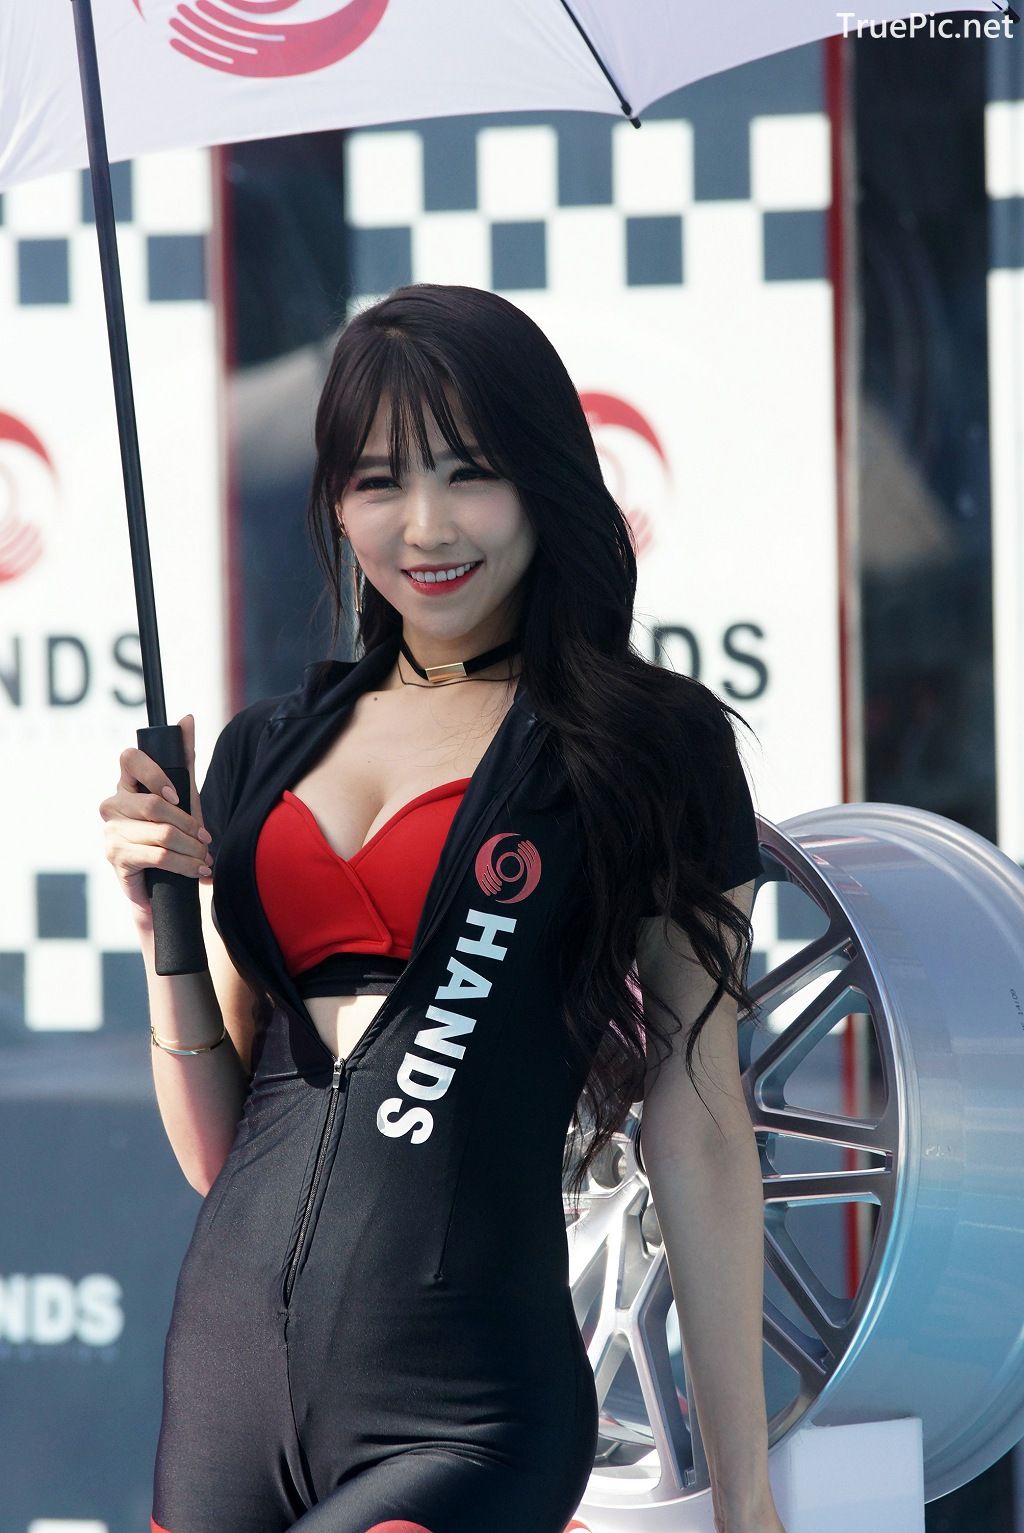 Image-Korean-Racing-Model-Lee-Eun-Hye-At-Incheon-Korea-Tuning-Festival-TruePic.net- Picture-19